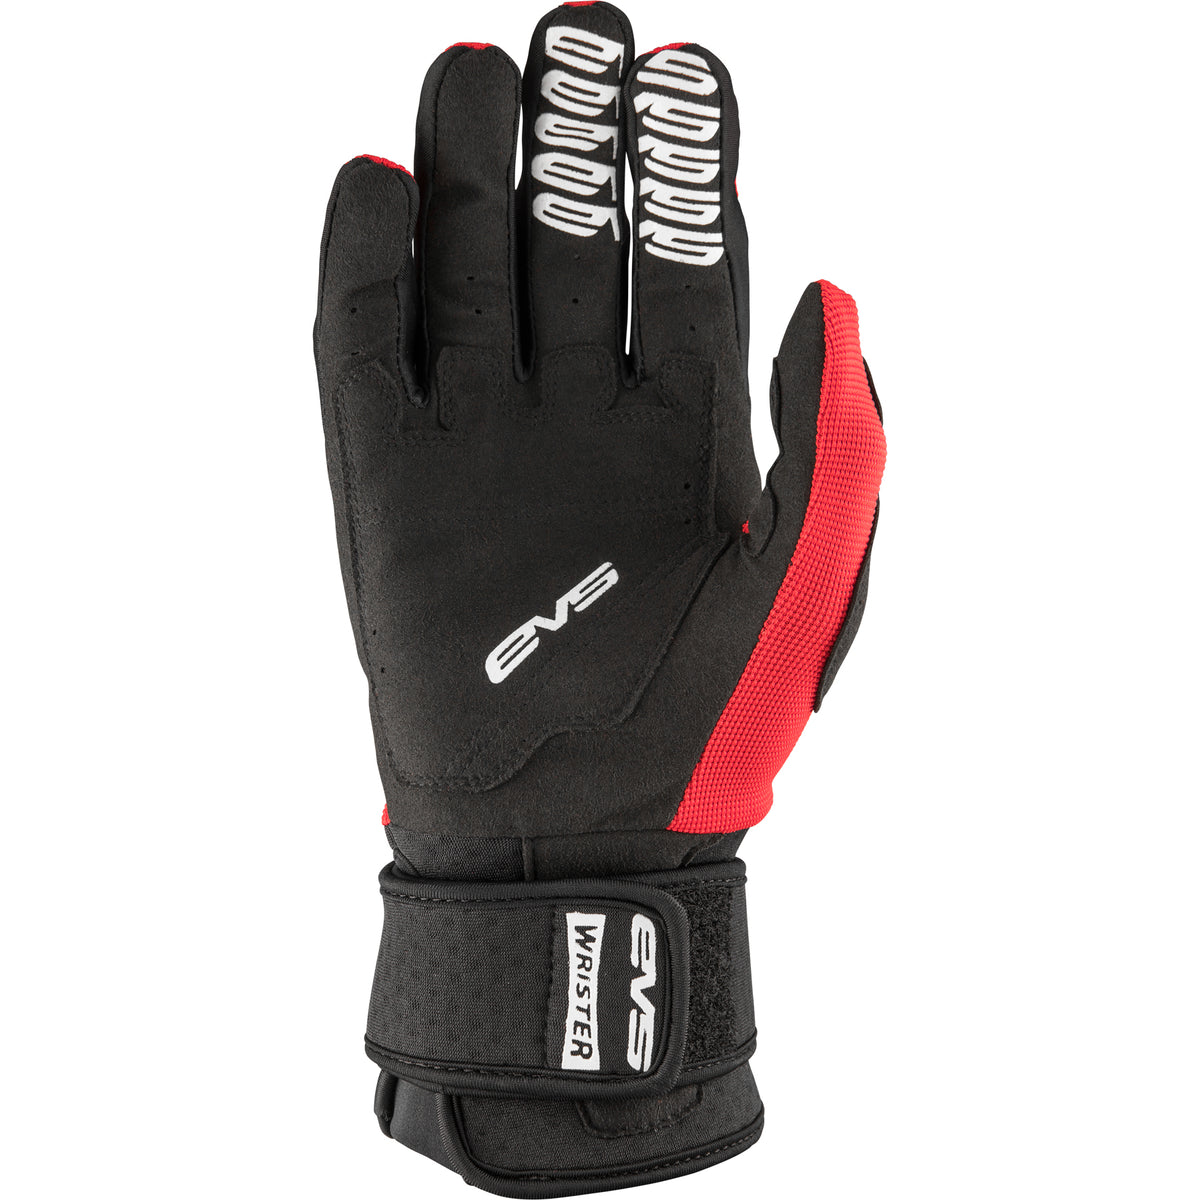 Wrister Glove - EVS Sports